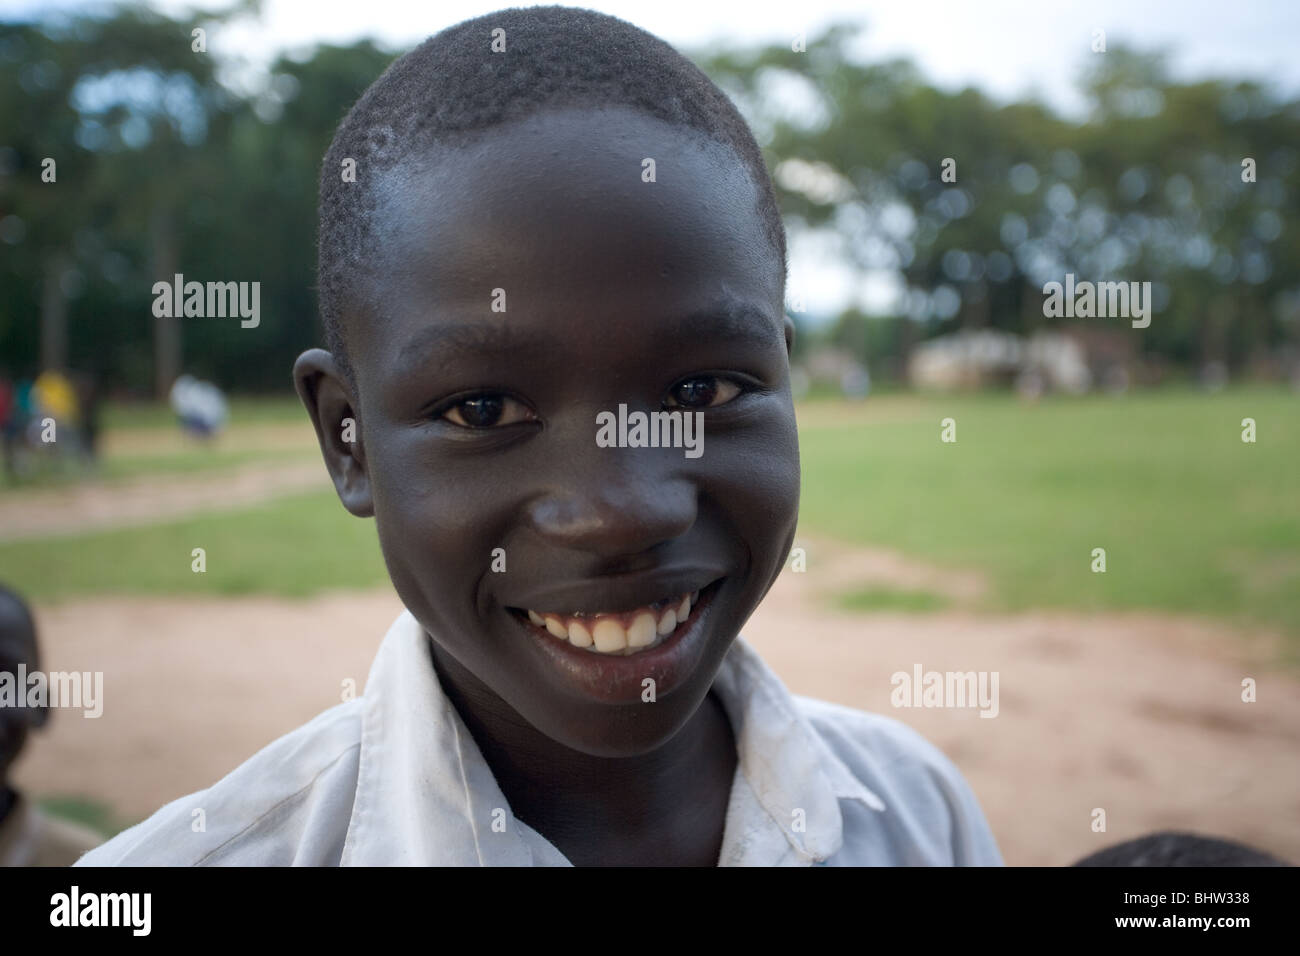 Portrait of a smiling boy in Uganda, Africa Stock Photo